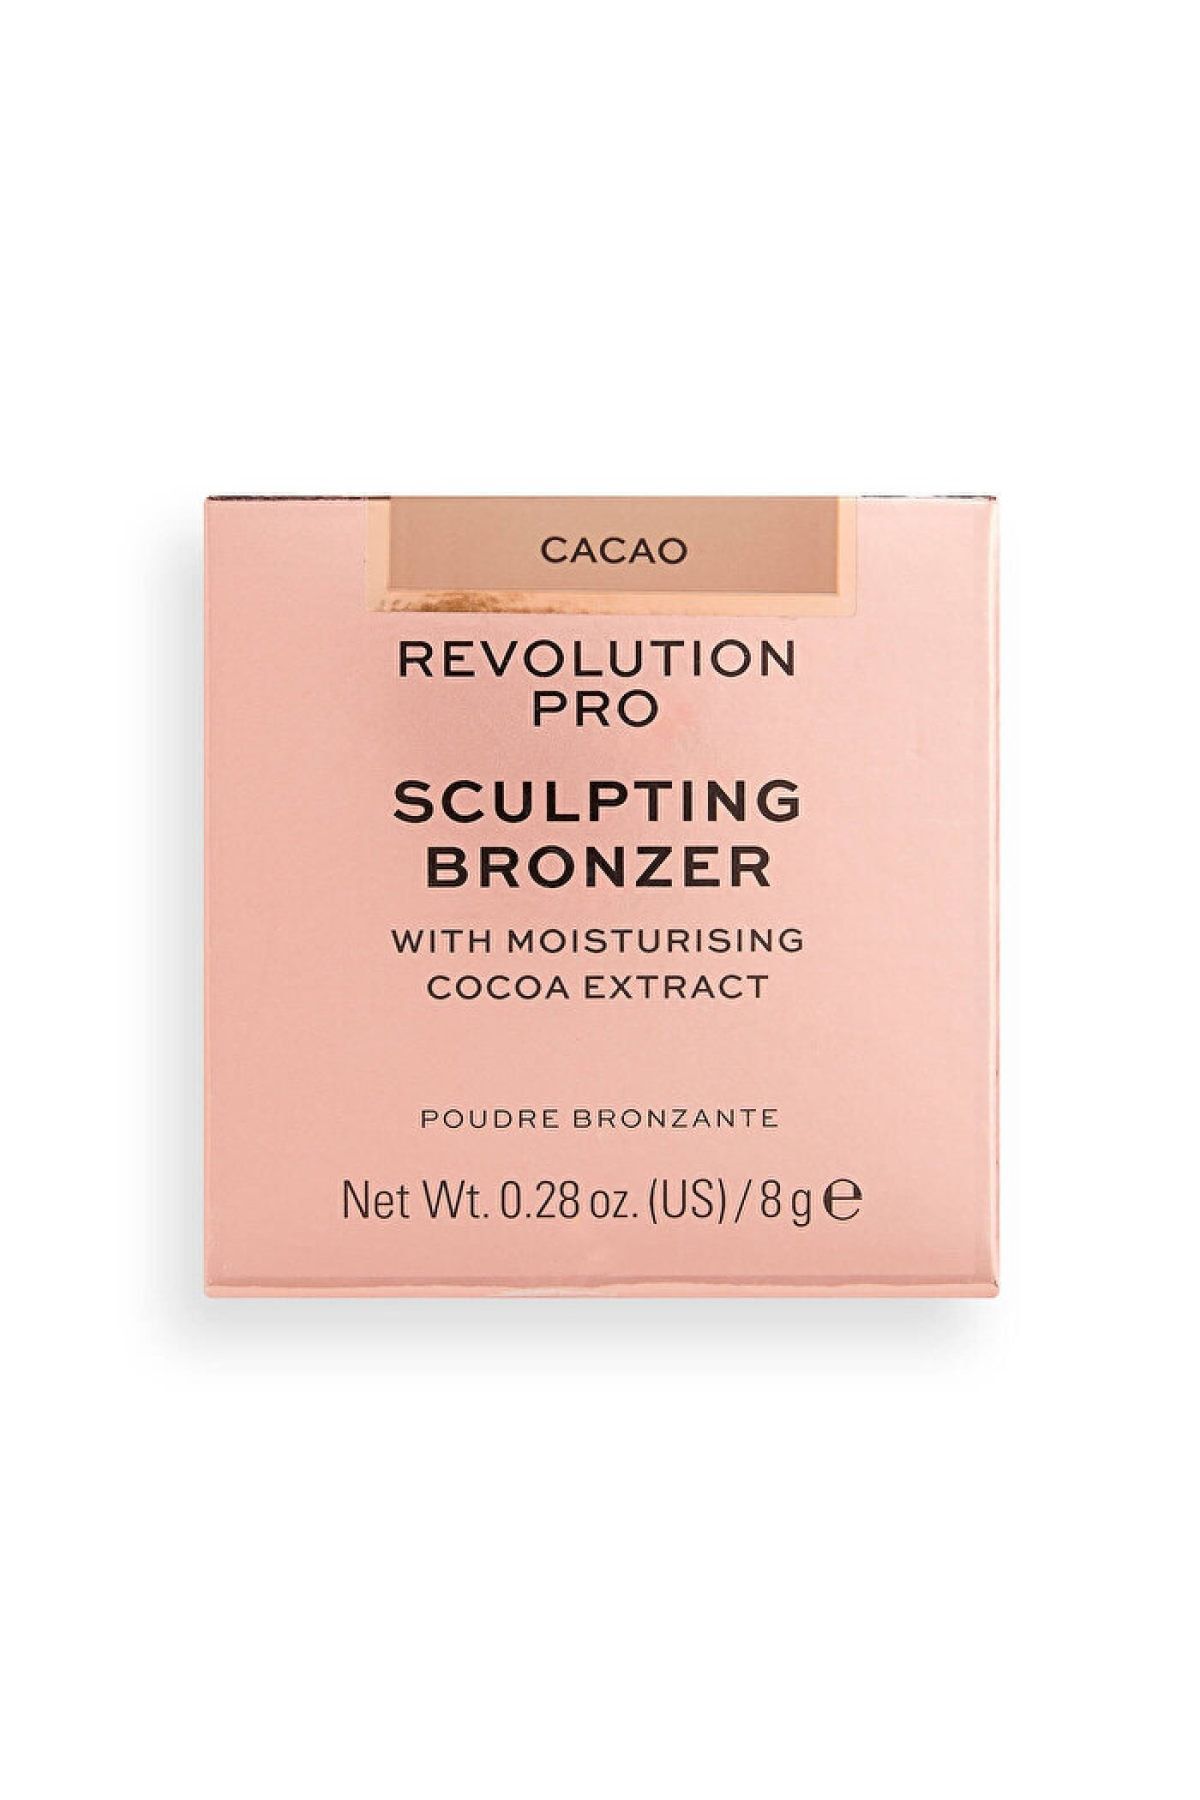 Revolution Pro Bronzer
cacao